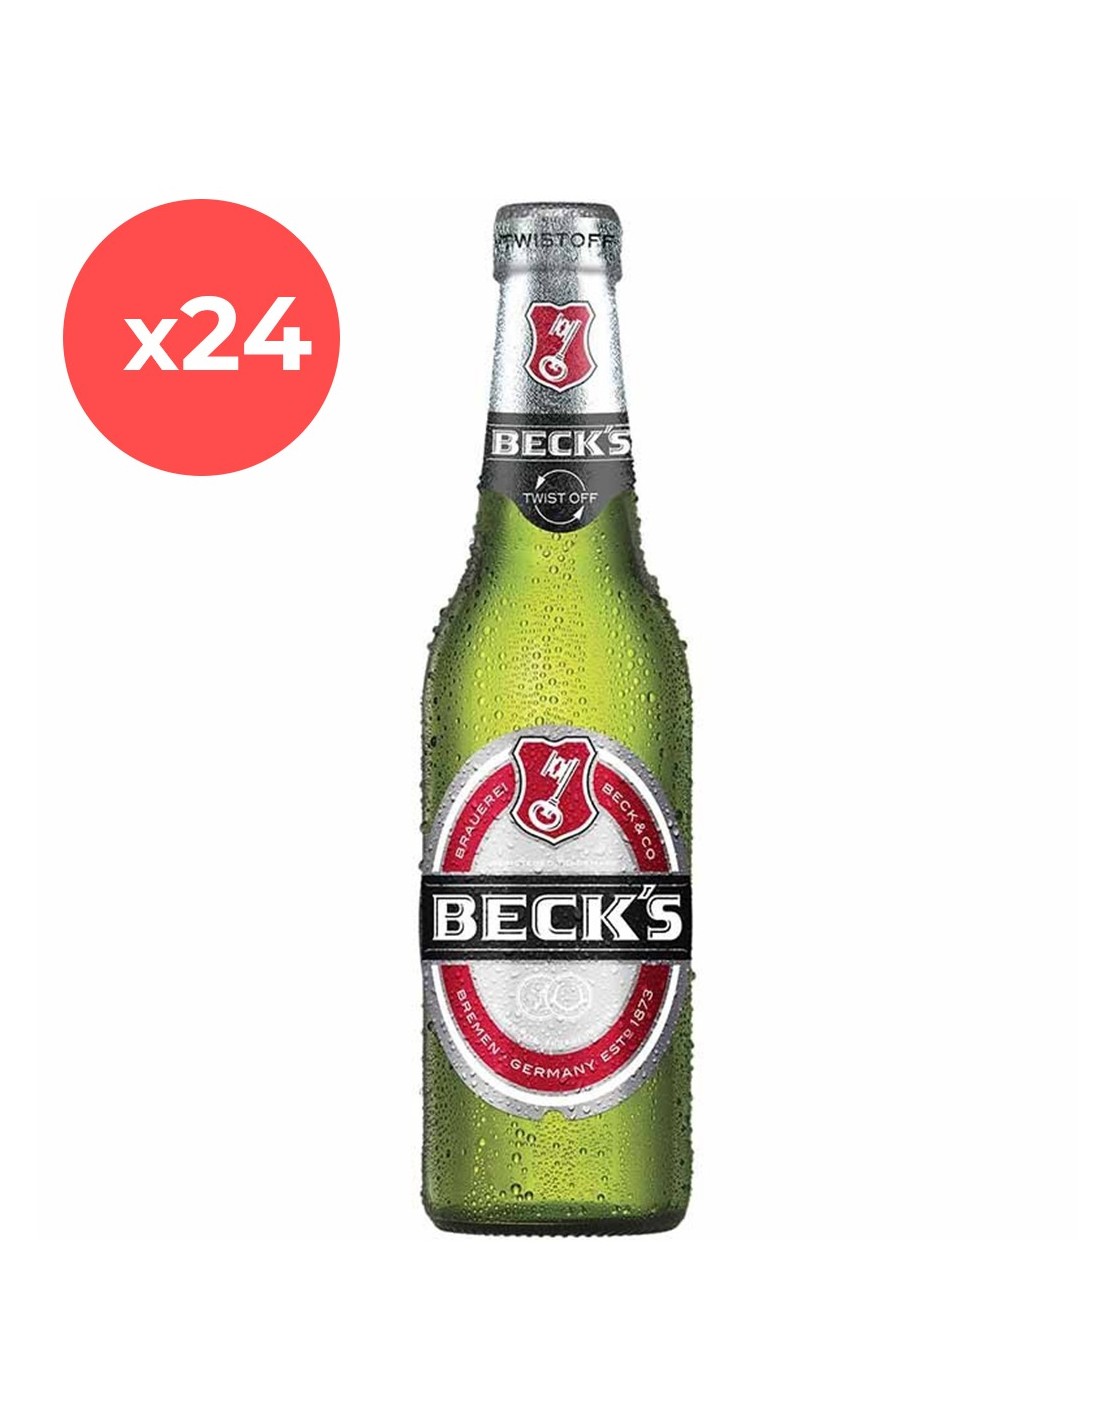 Bax 24 bucati bere blonda, Pilsner, Beck's, 4.9% alc., 0.33L, sticla, Romania